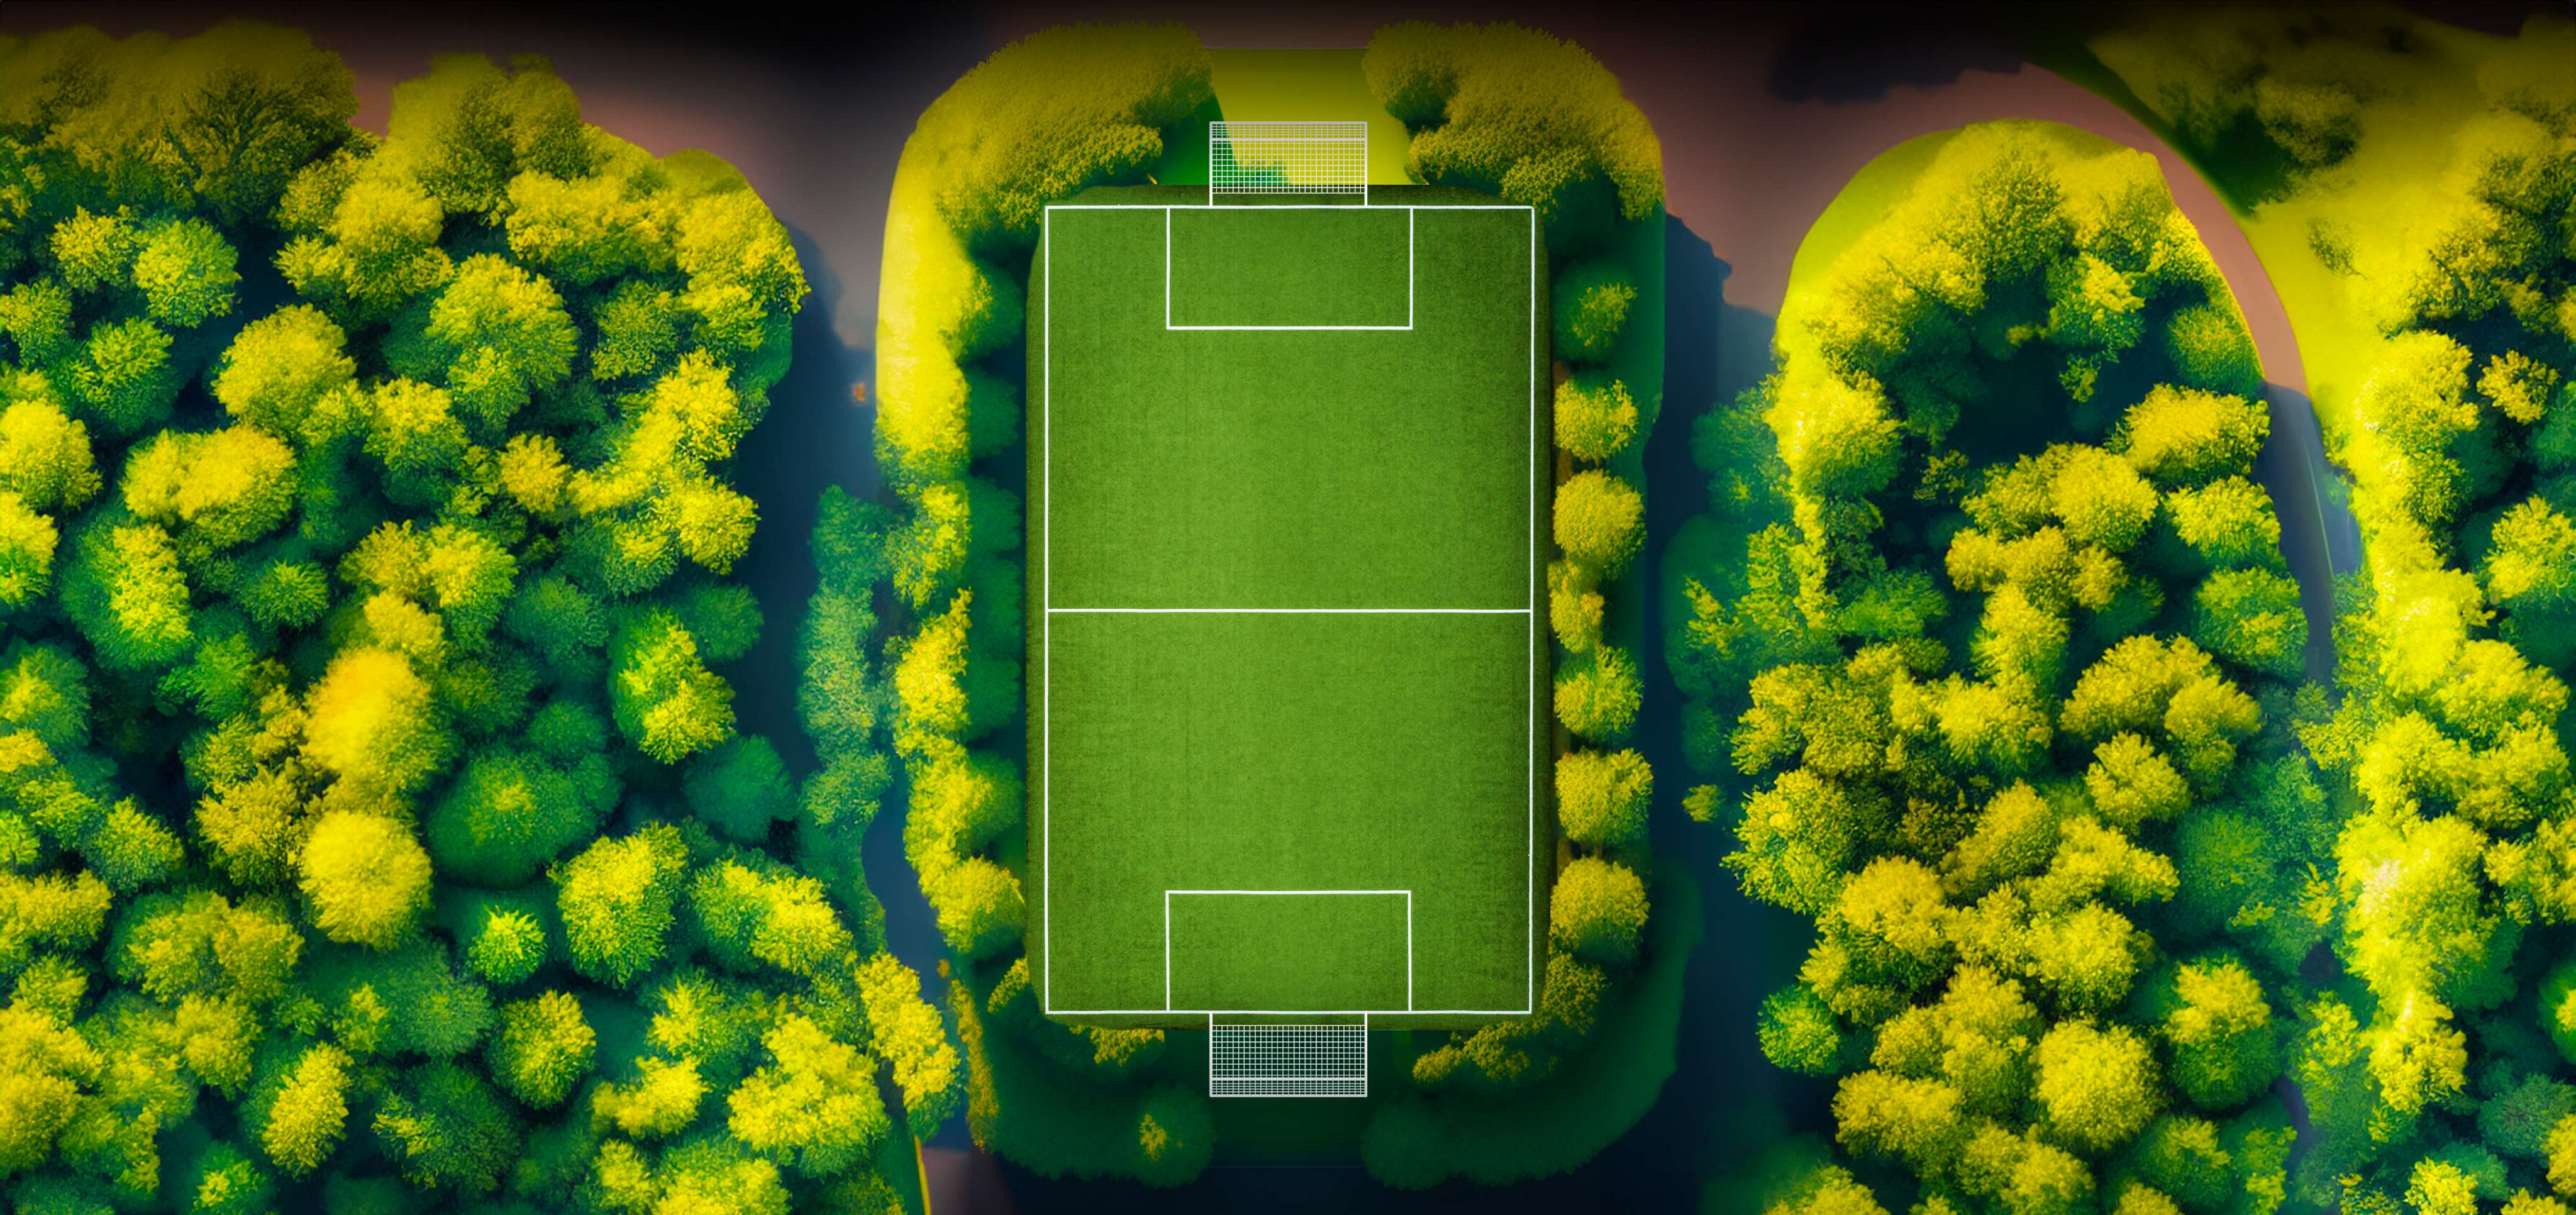 teren de fotbal inconjurat de copaci